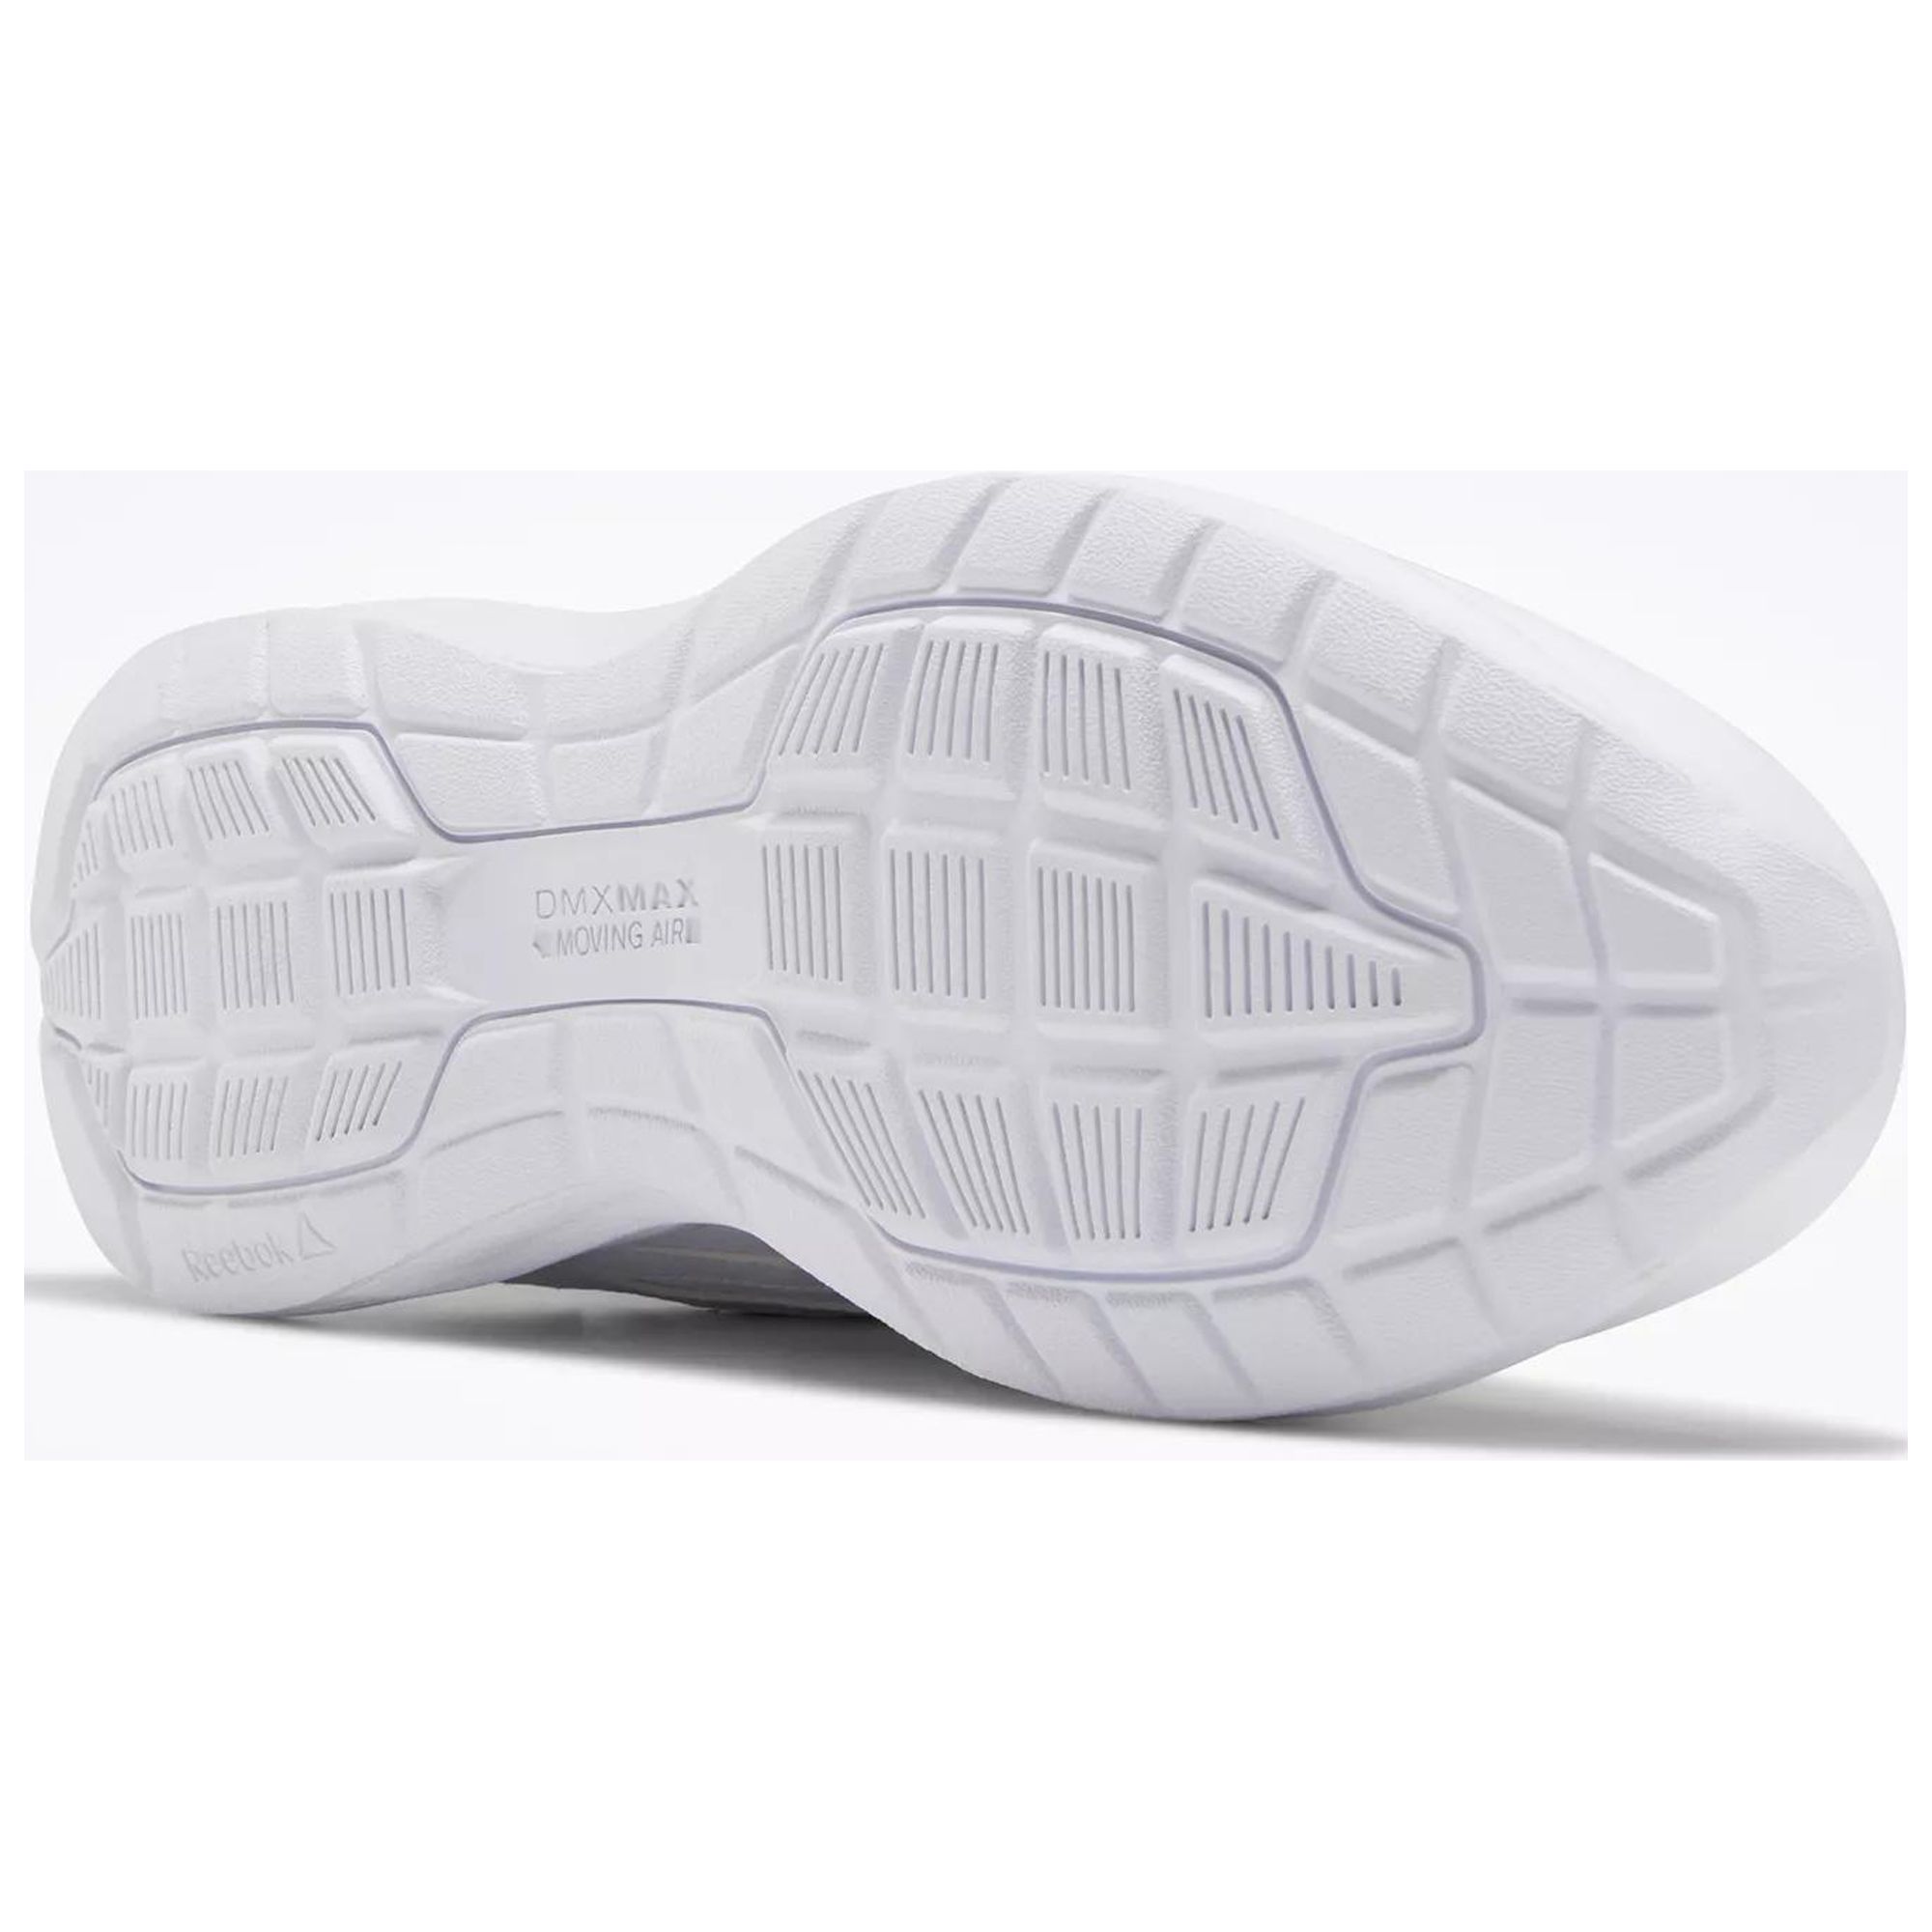 Reebok Walk Ultra 7 DMX MAX Men's Shoes - image 6 of 10